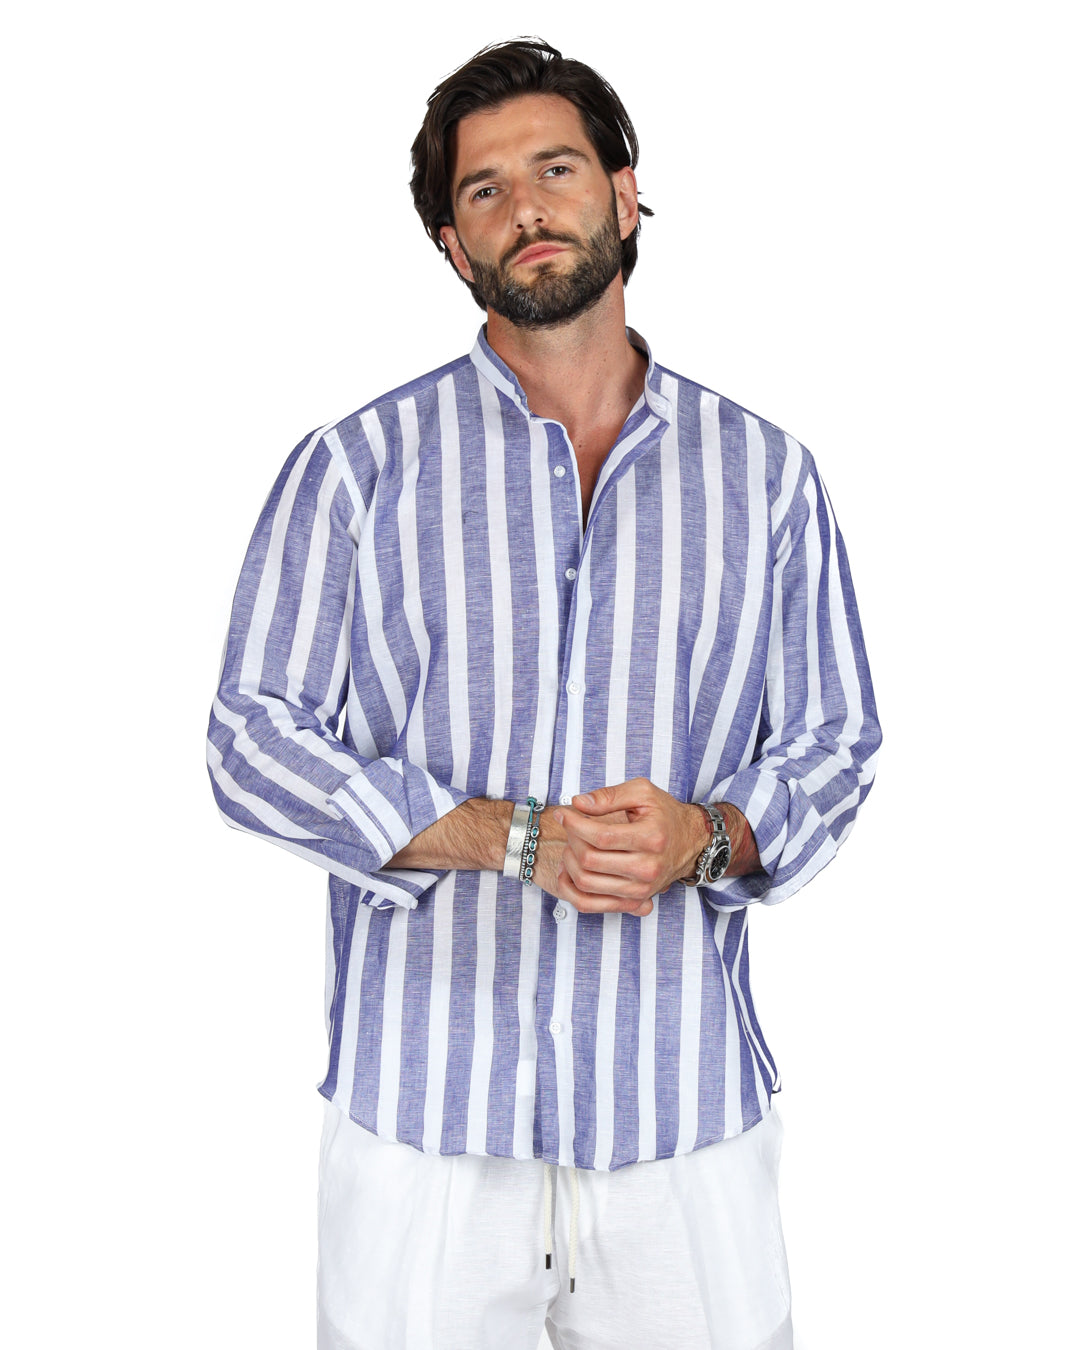 Amalfi - Korean shirt with maxi blue stripes